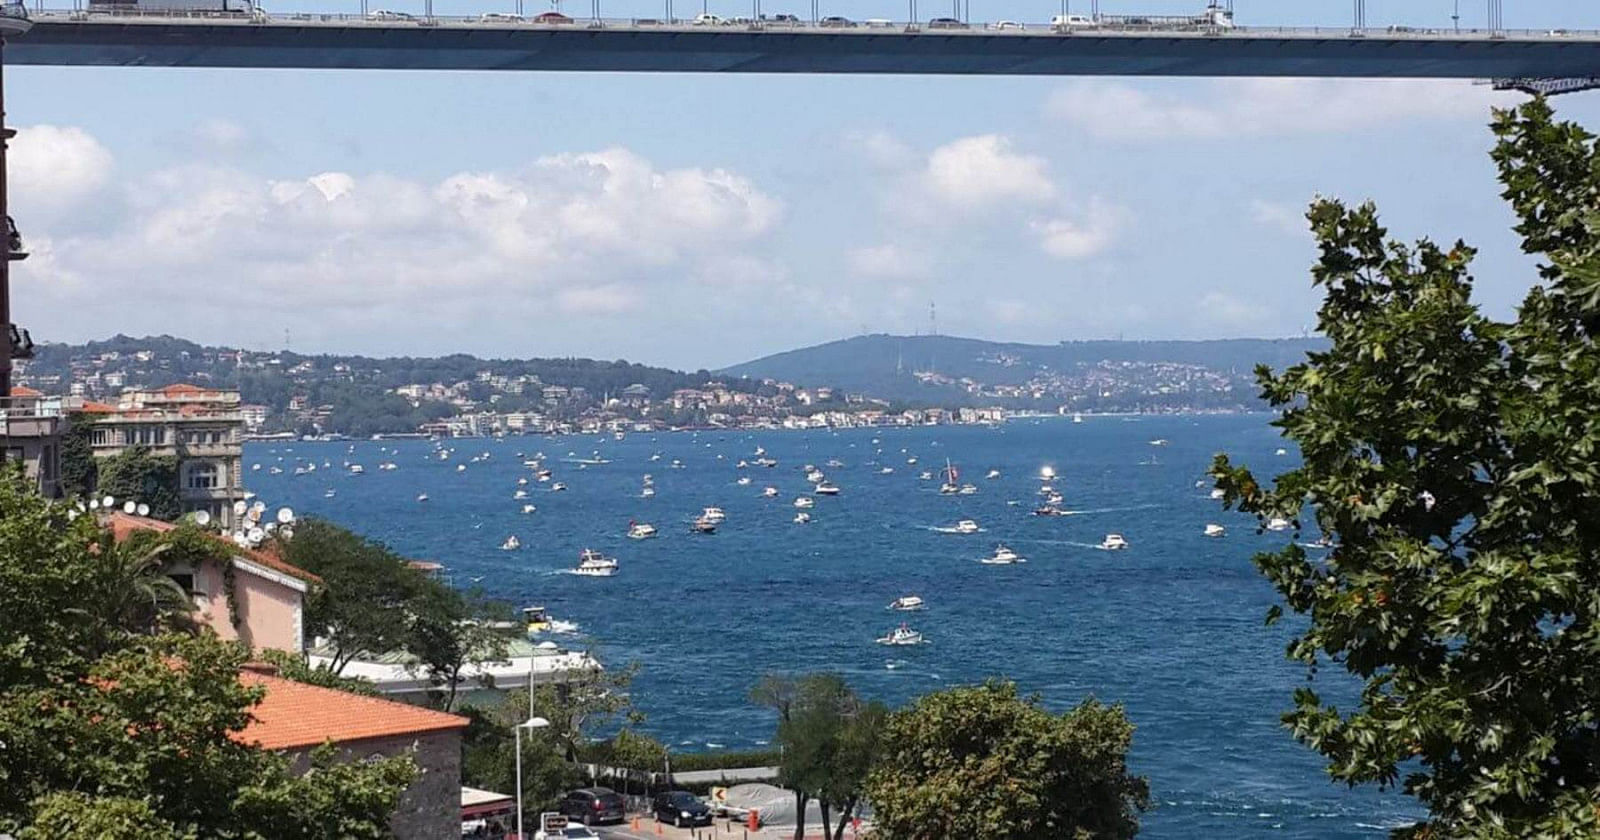 Lej en båd i İstanbul